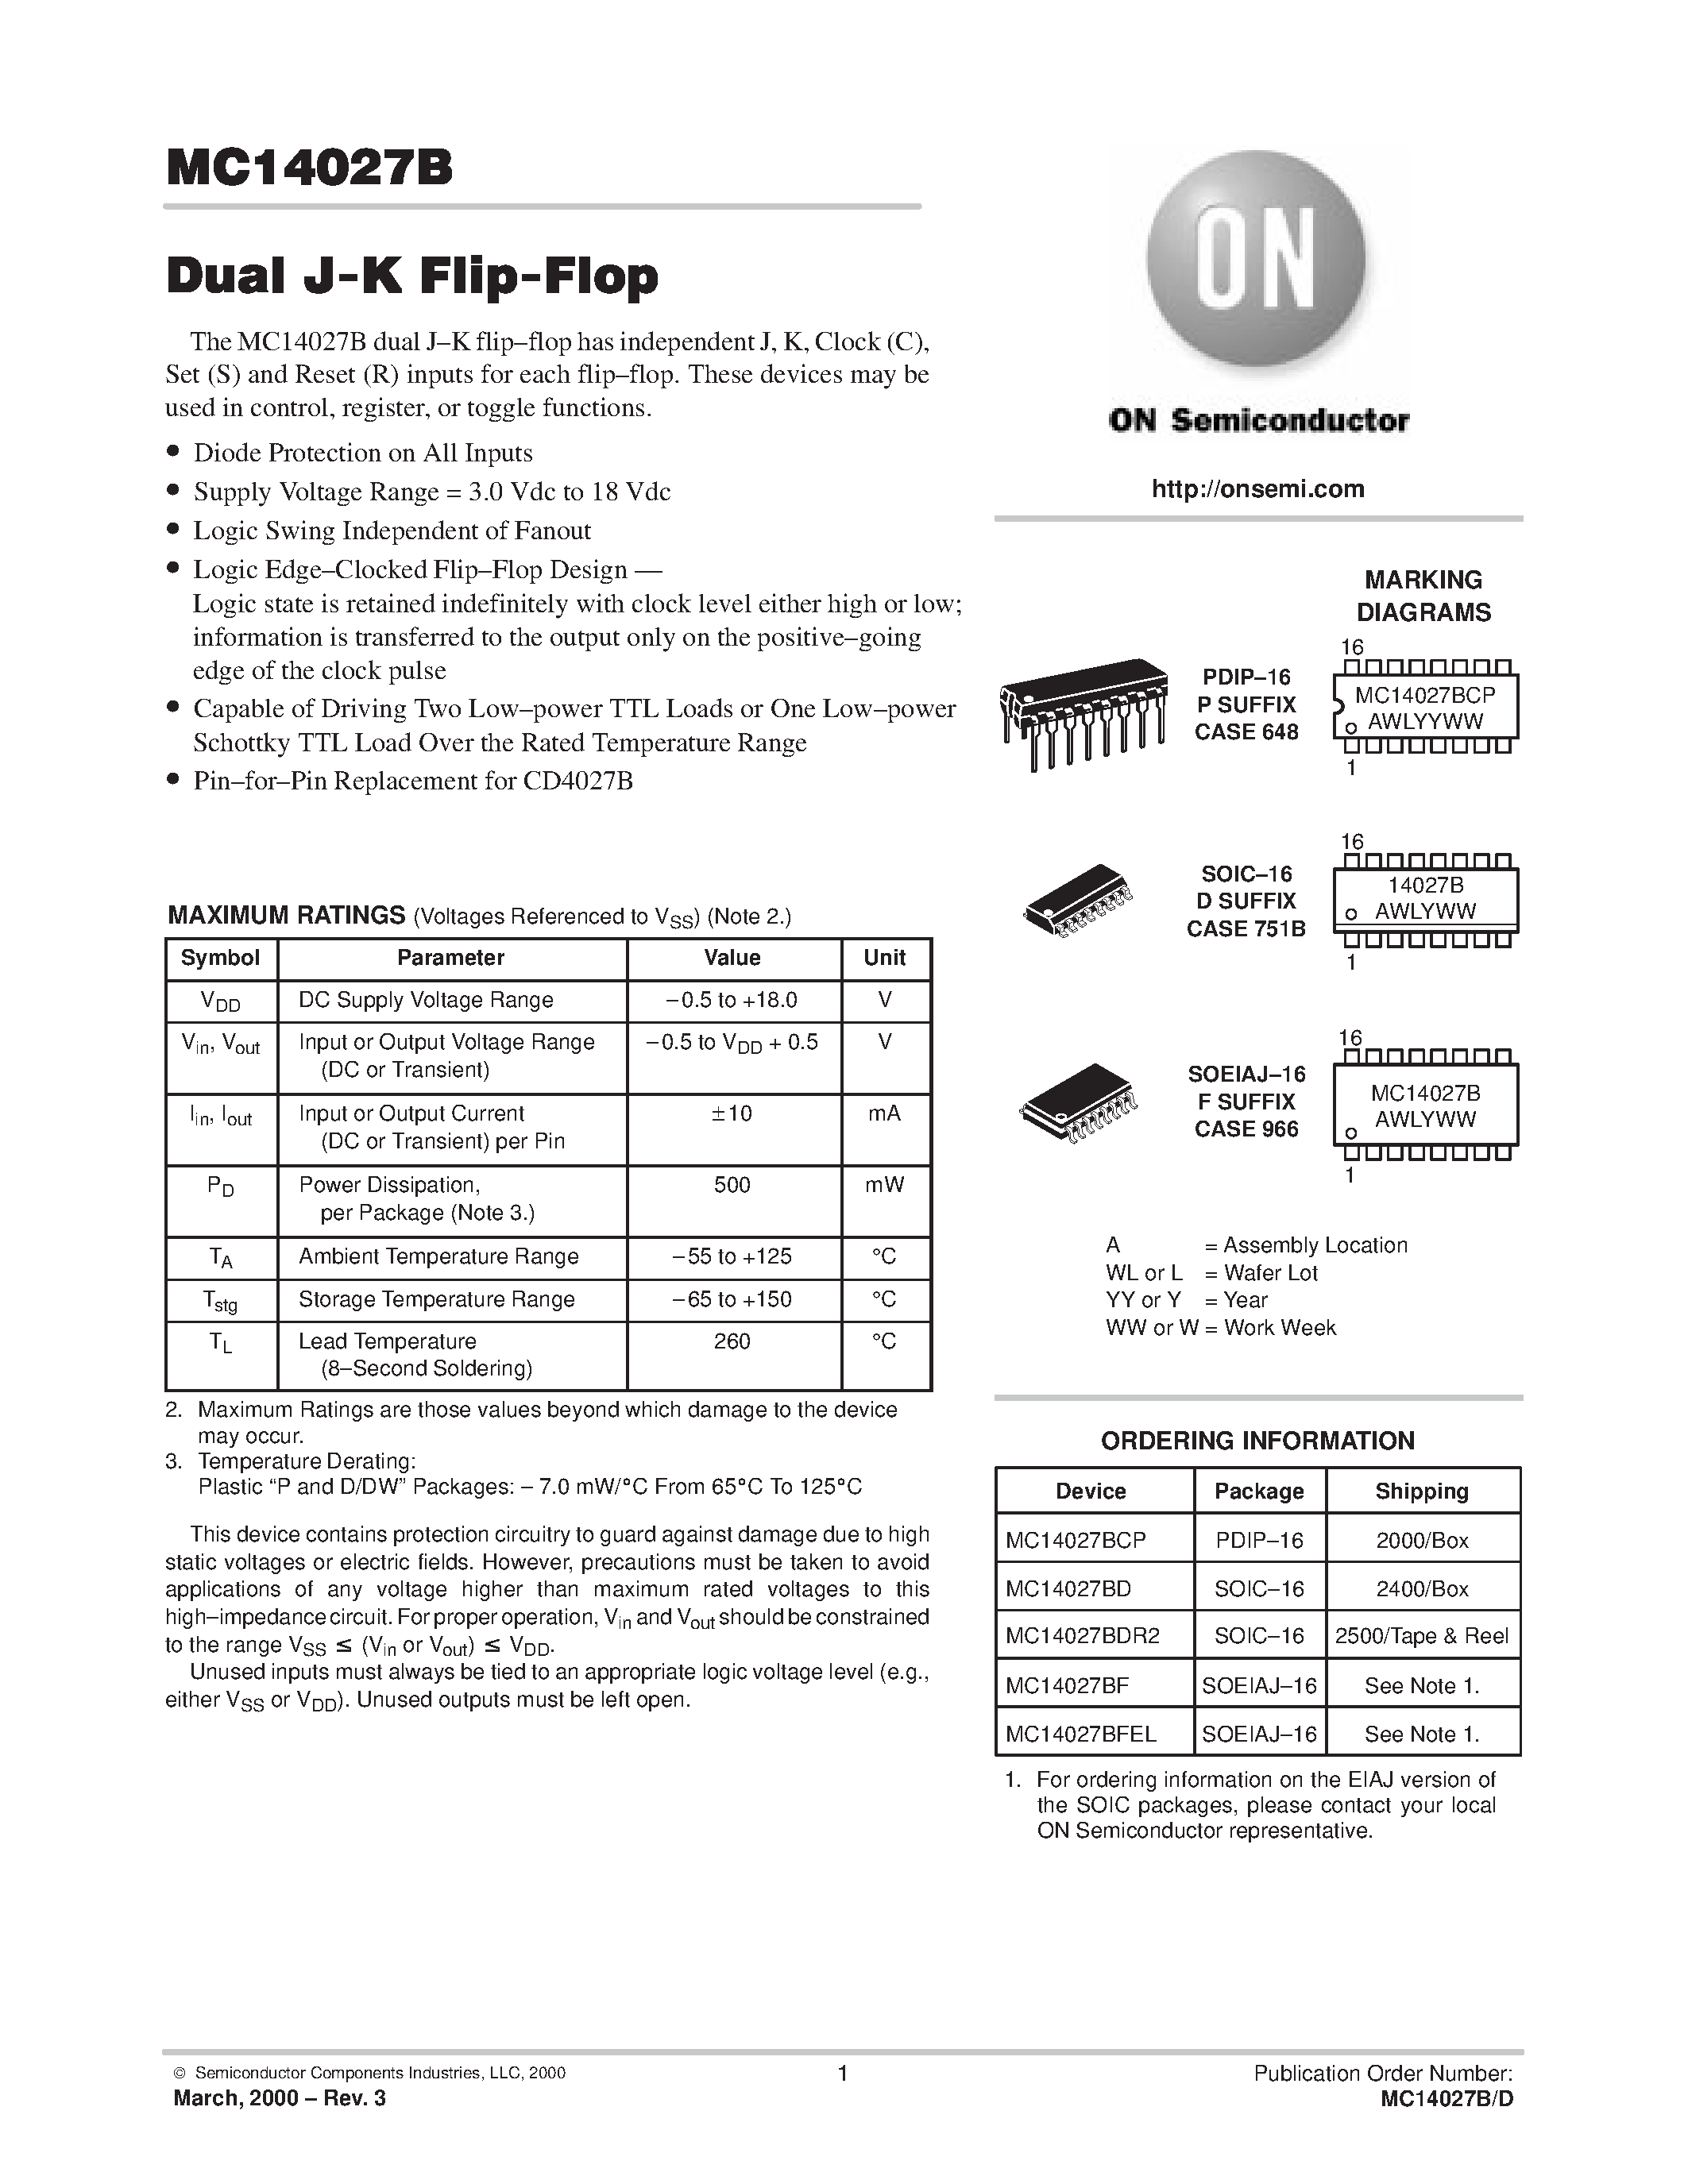 Datasheet MC14027BF - Dual J-K Flip-Flop page 1